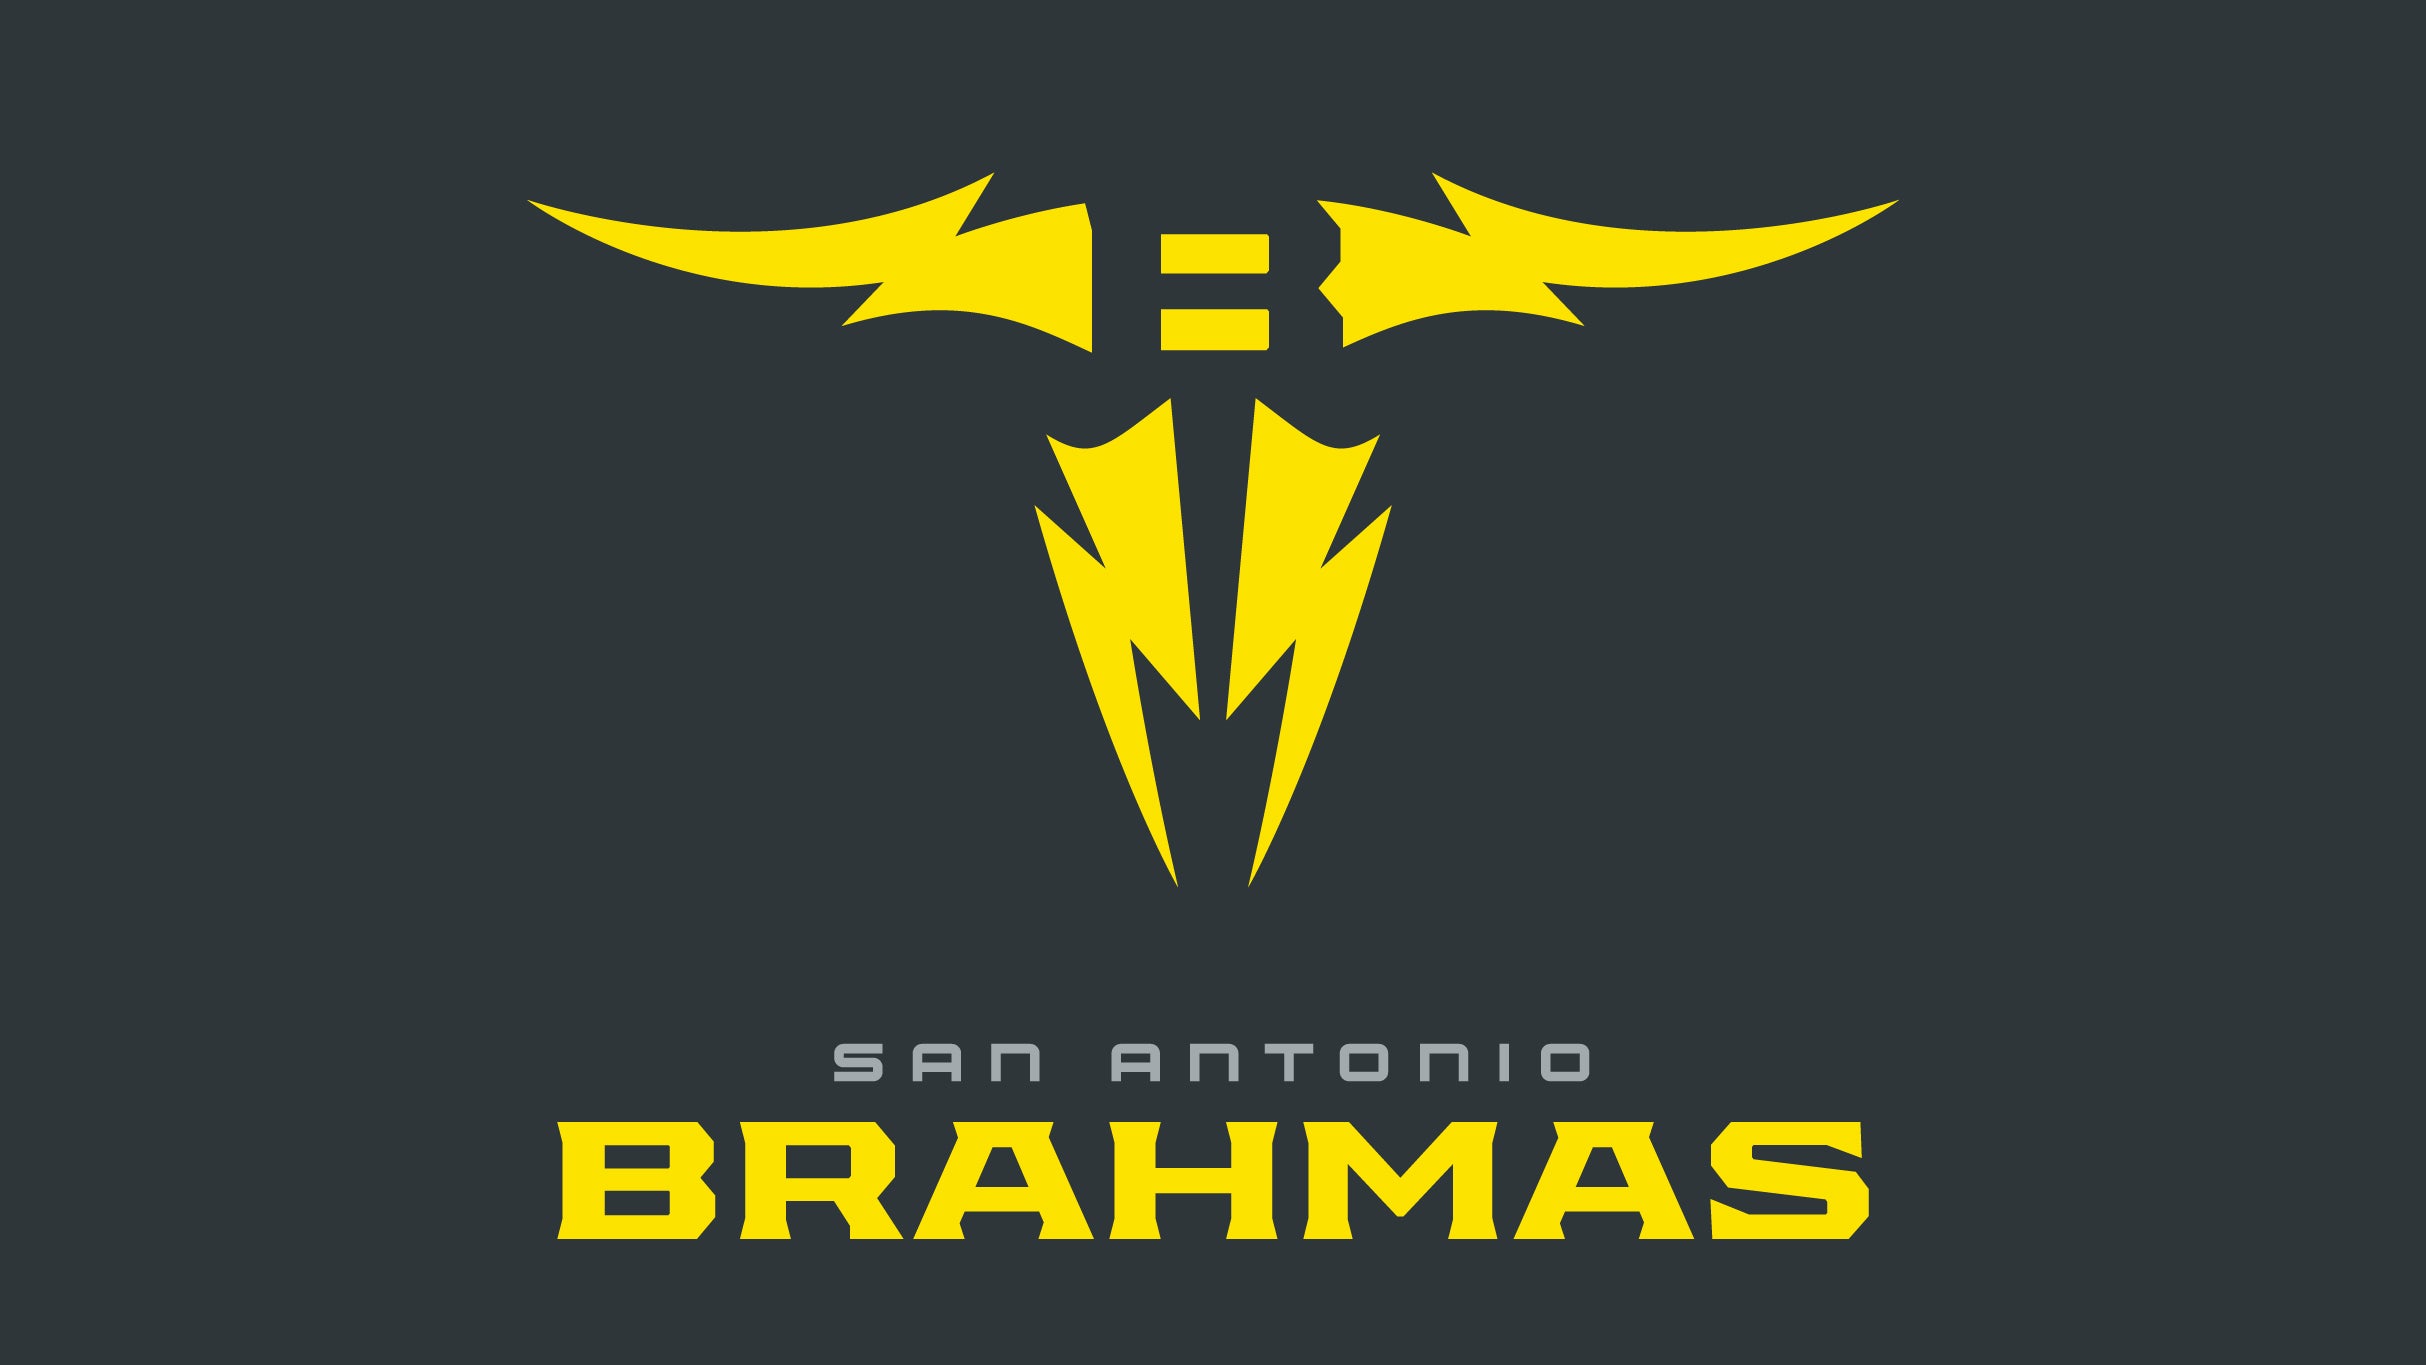 San Antonio Brahmas vs. St. Louis Battlehawks free presale code for early tickets in San Antonio